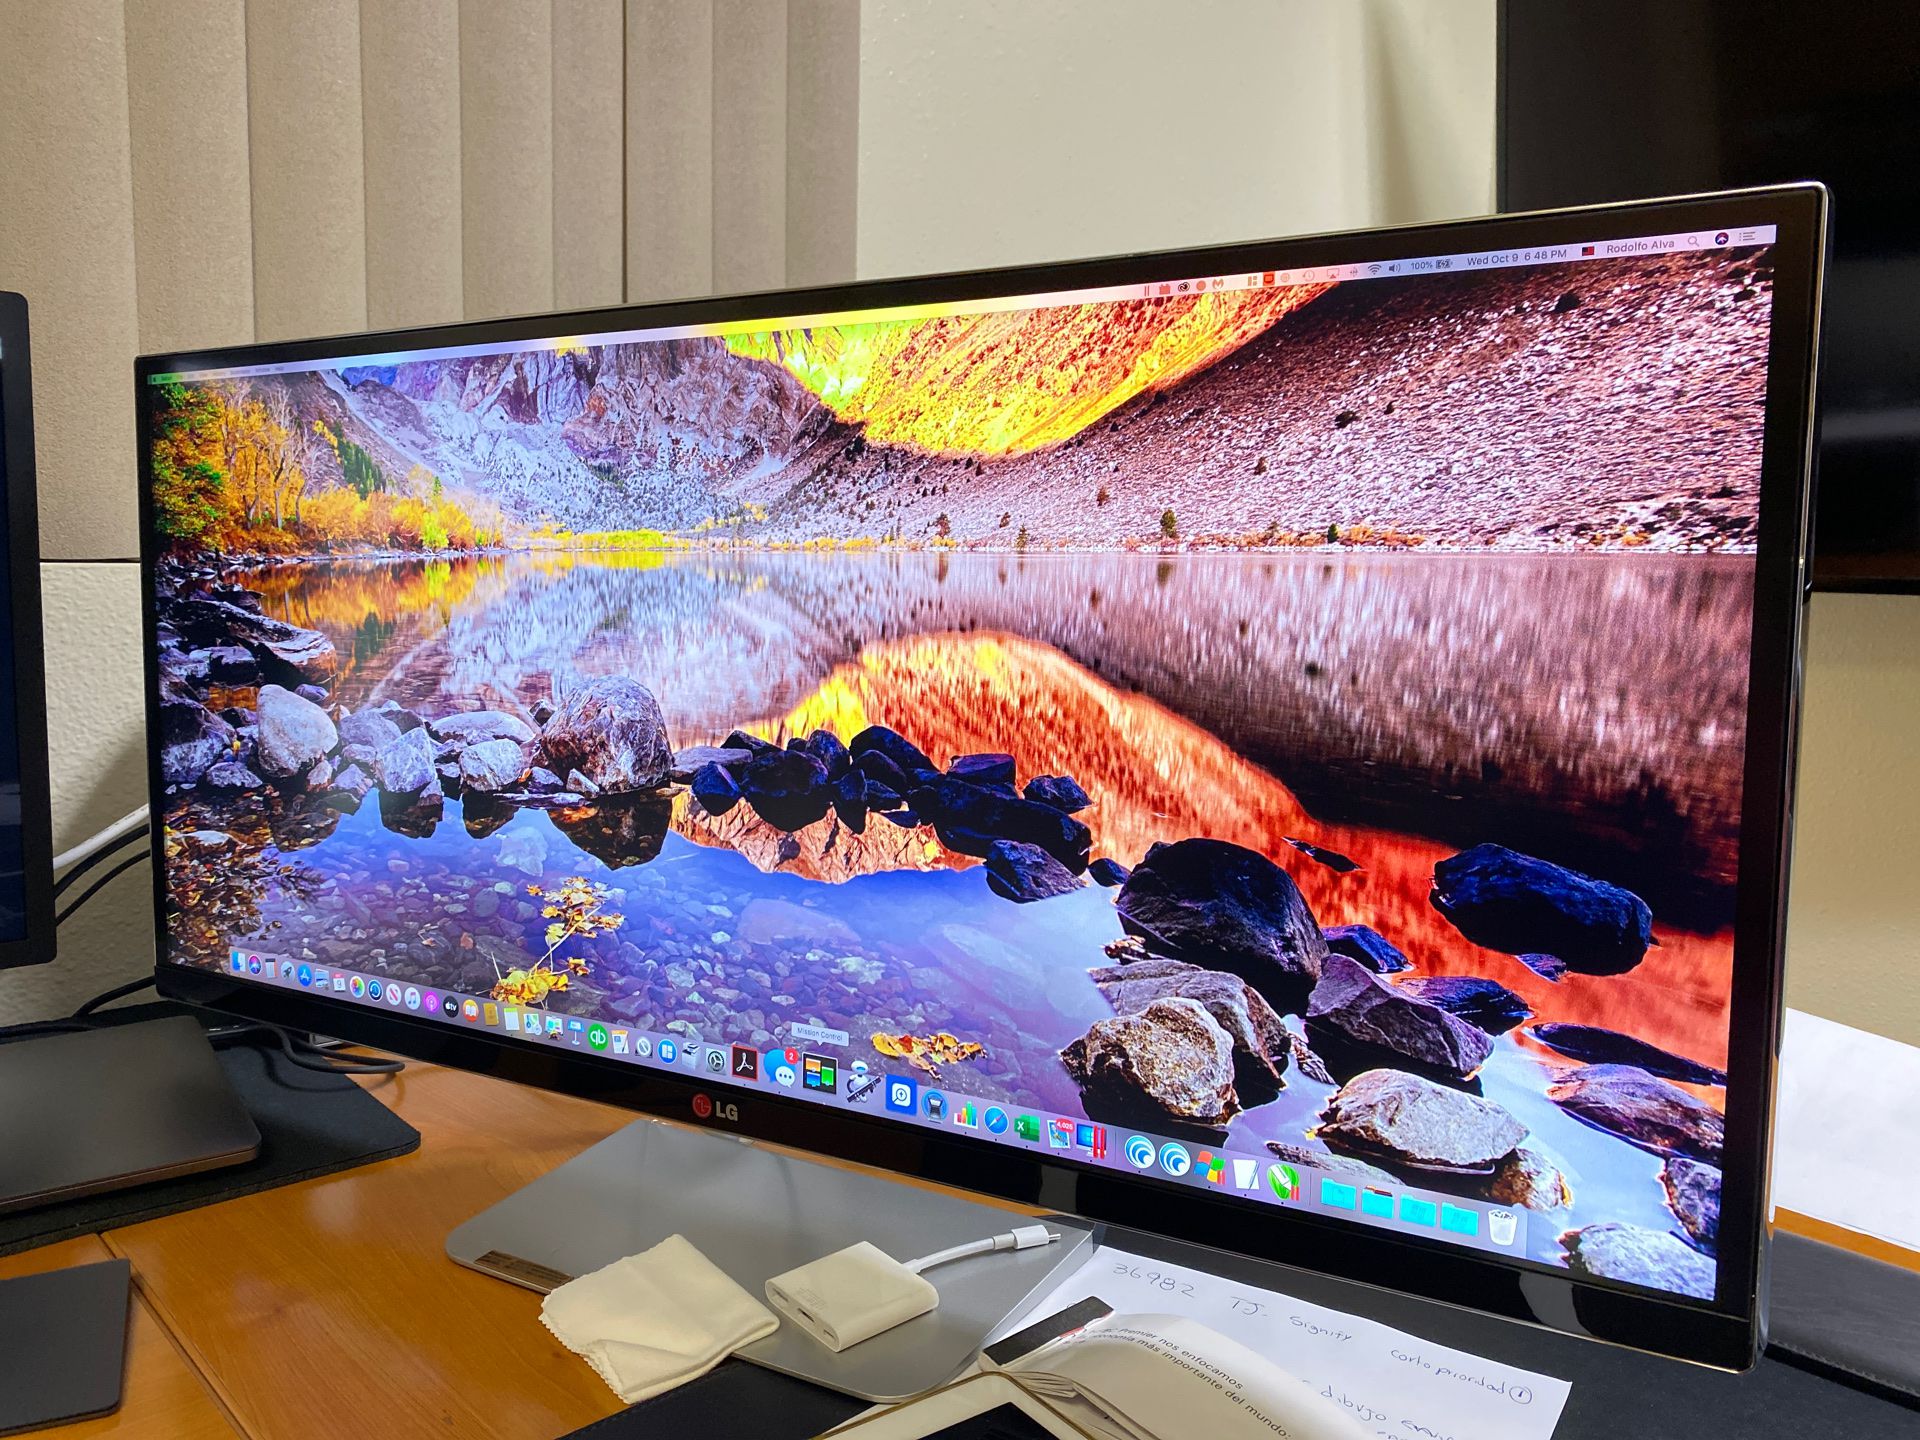 Beautiful 32 inch LG monitor running on a MacBook Pro model 34UM95